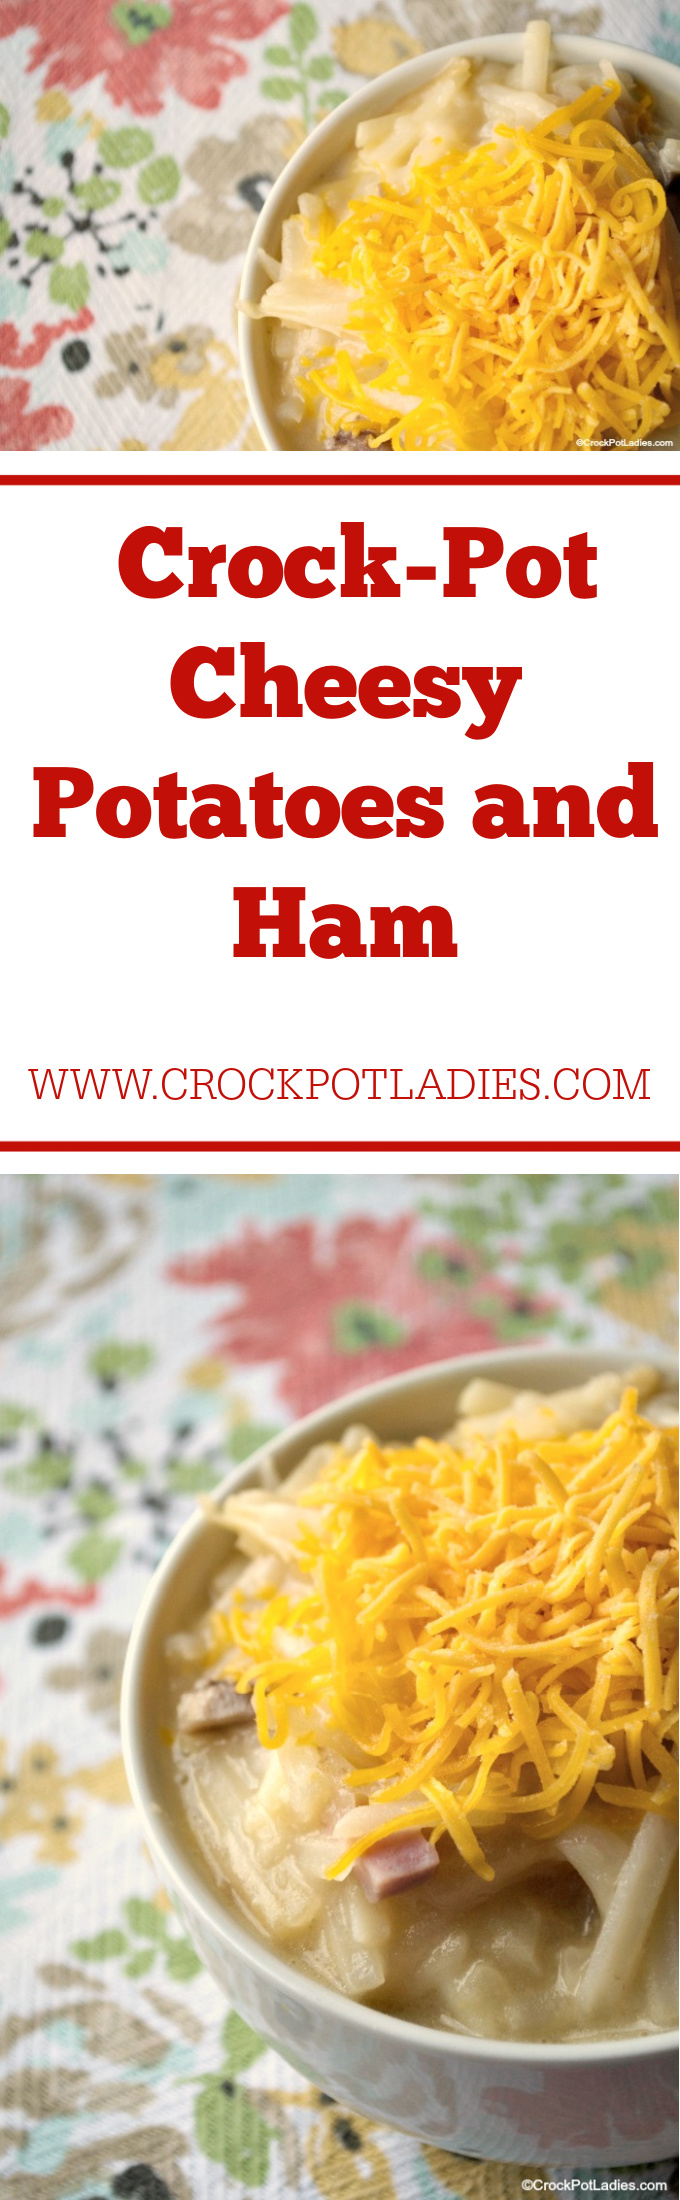 Crock-Pot Cheesy Potatoes and Ham